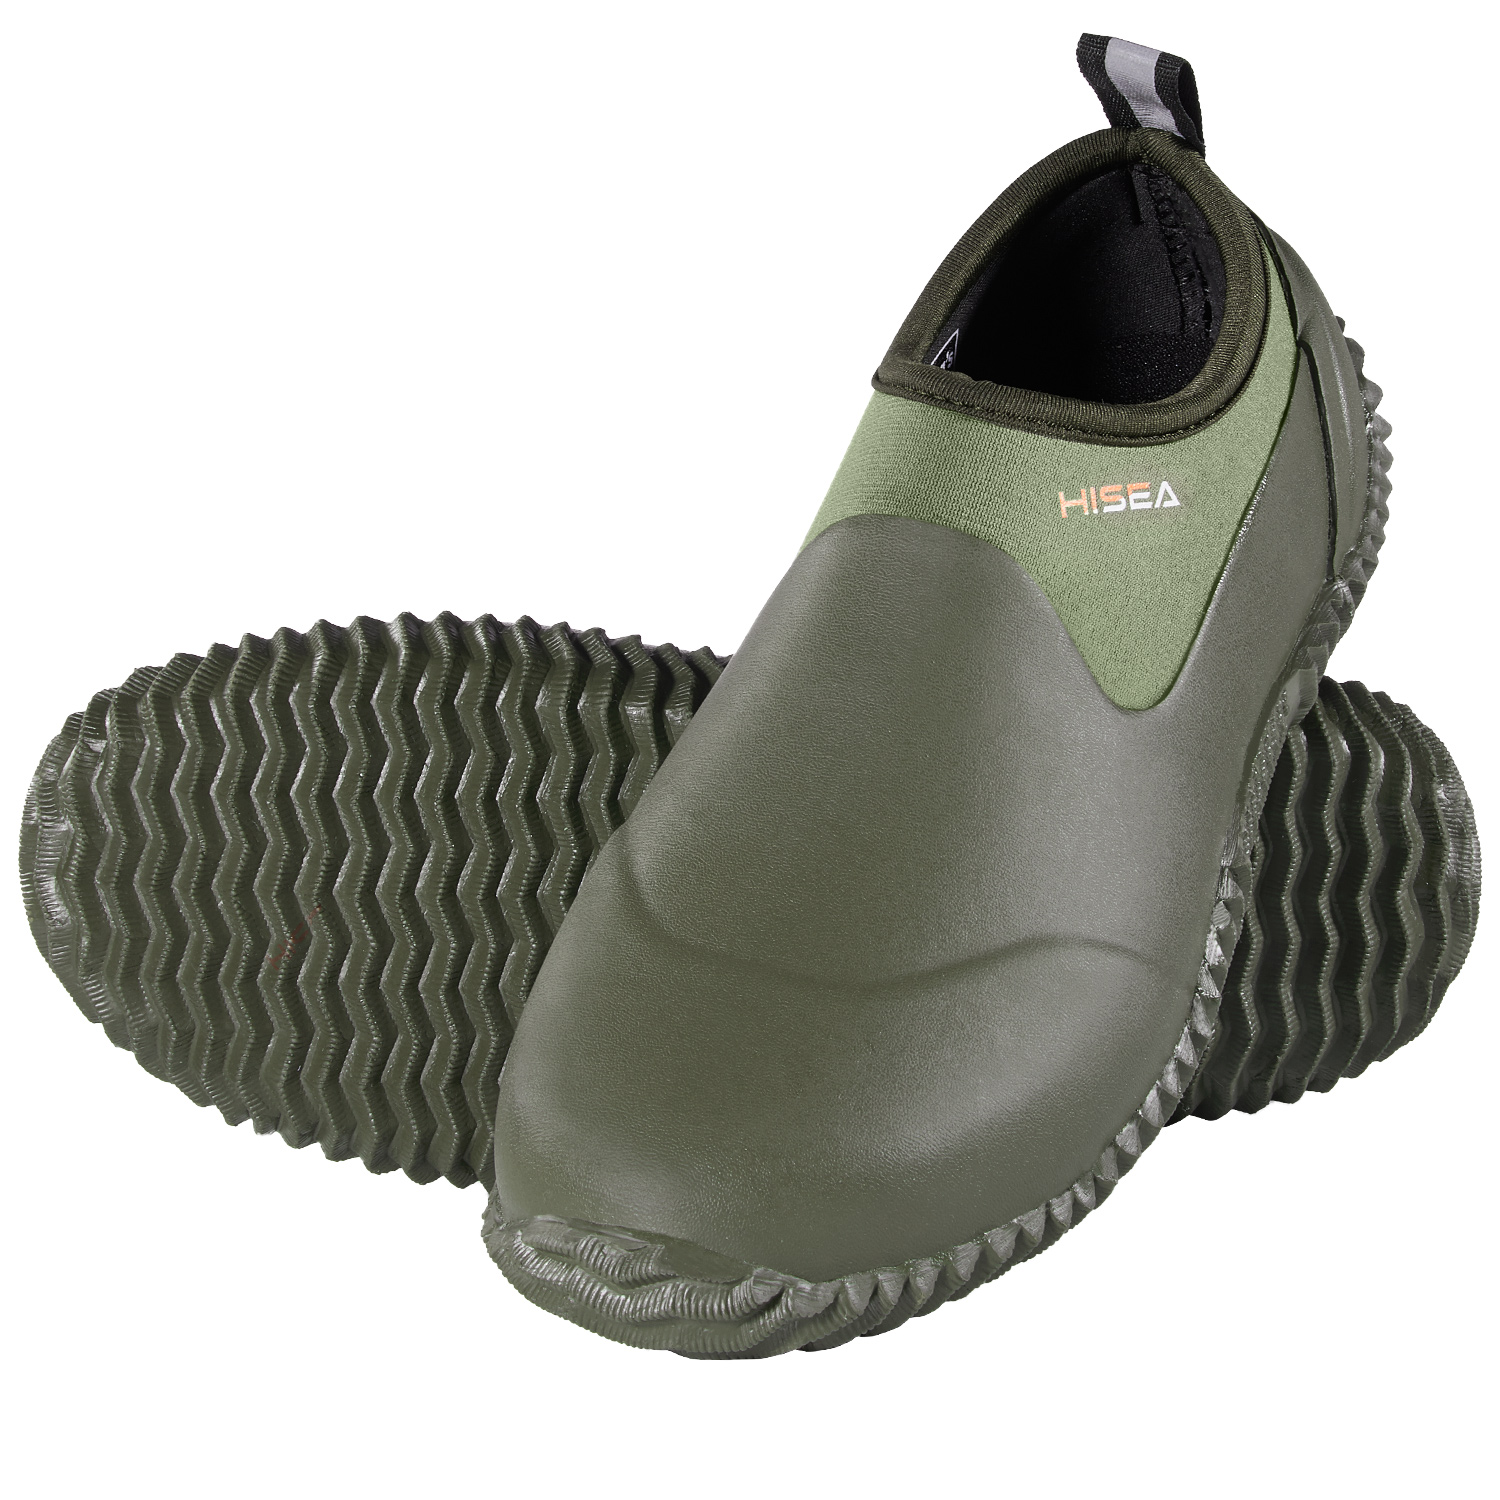 EHQJNJ Water Boots for Women Rain Boots Women Non Slip Detachable with ...